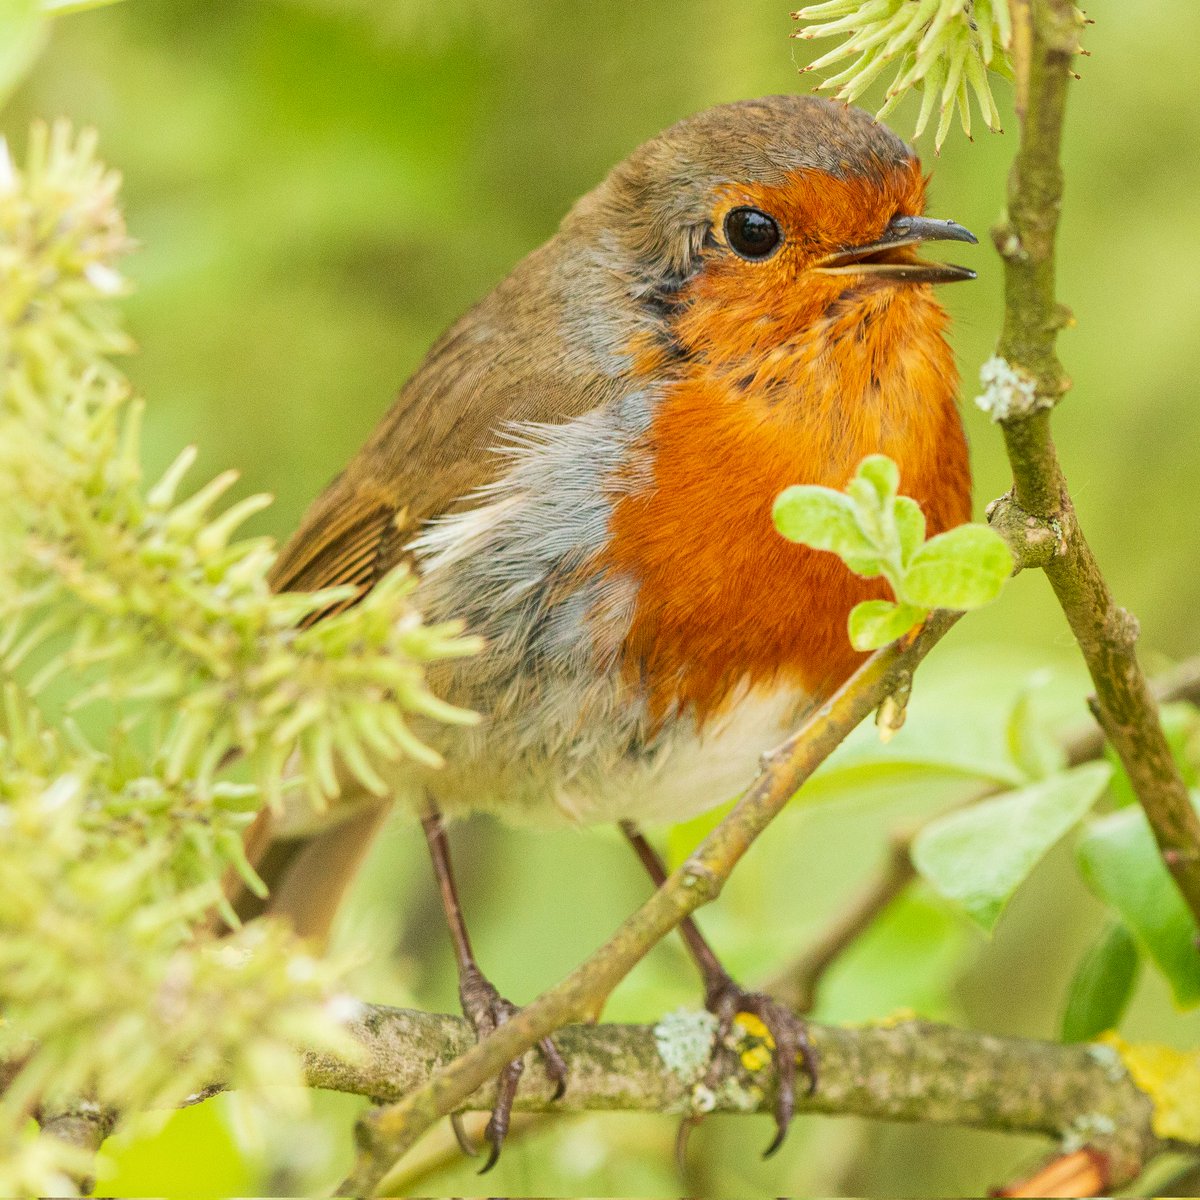 Robin at springtime
#robin 
#robinsofinstagram 
#spring 
#springtime 
#birding 
#birds 
#birdwatching 
#birdphotography 
#springwatch 
@BBCSpringwatch
@BBCCountryfile